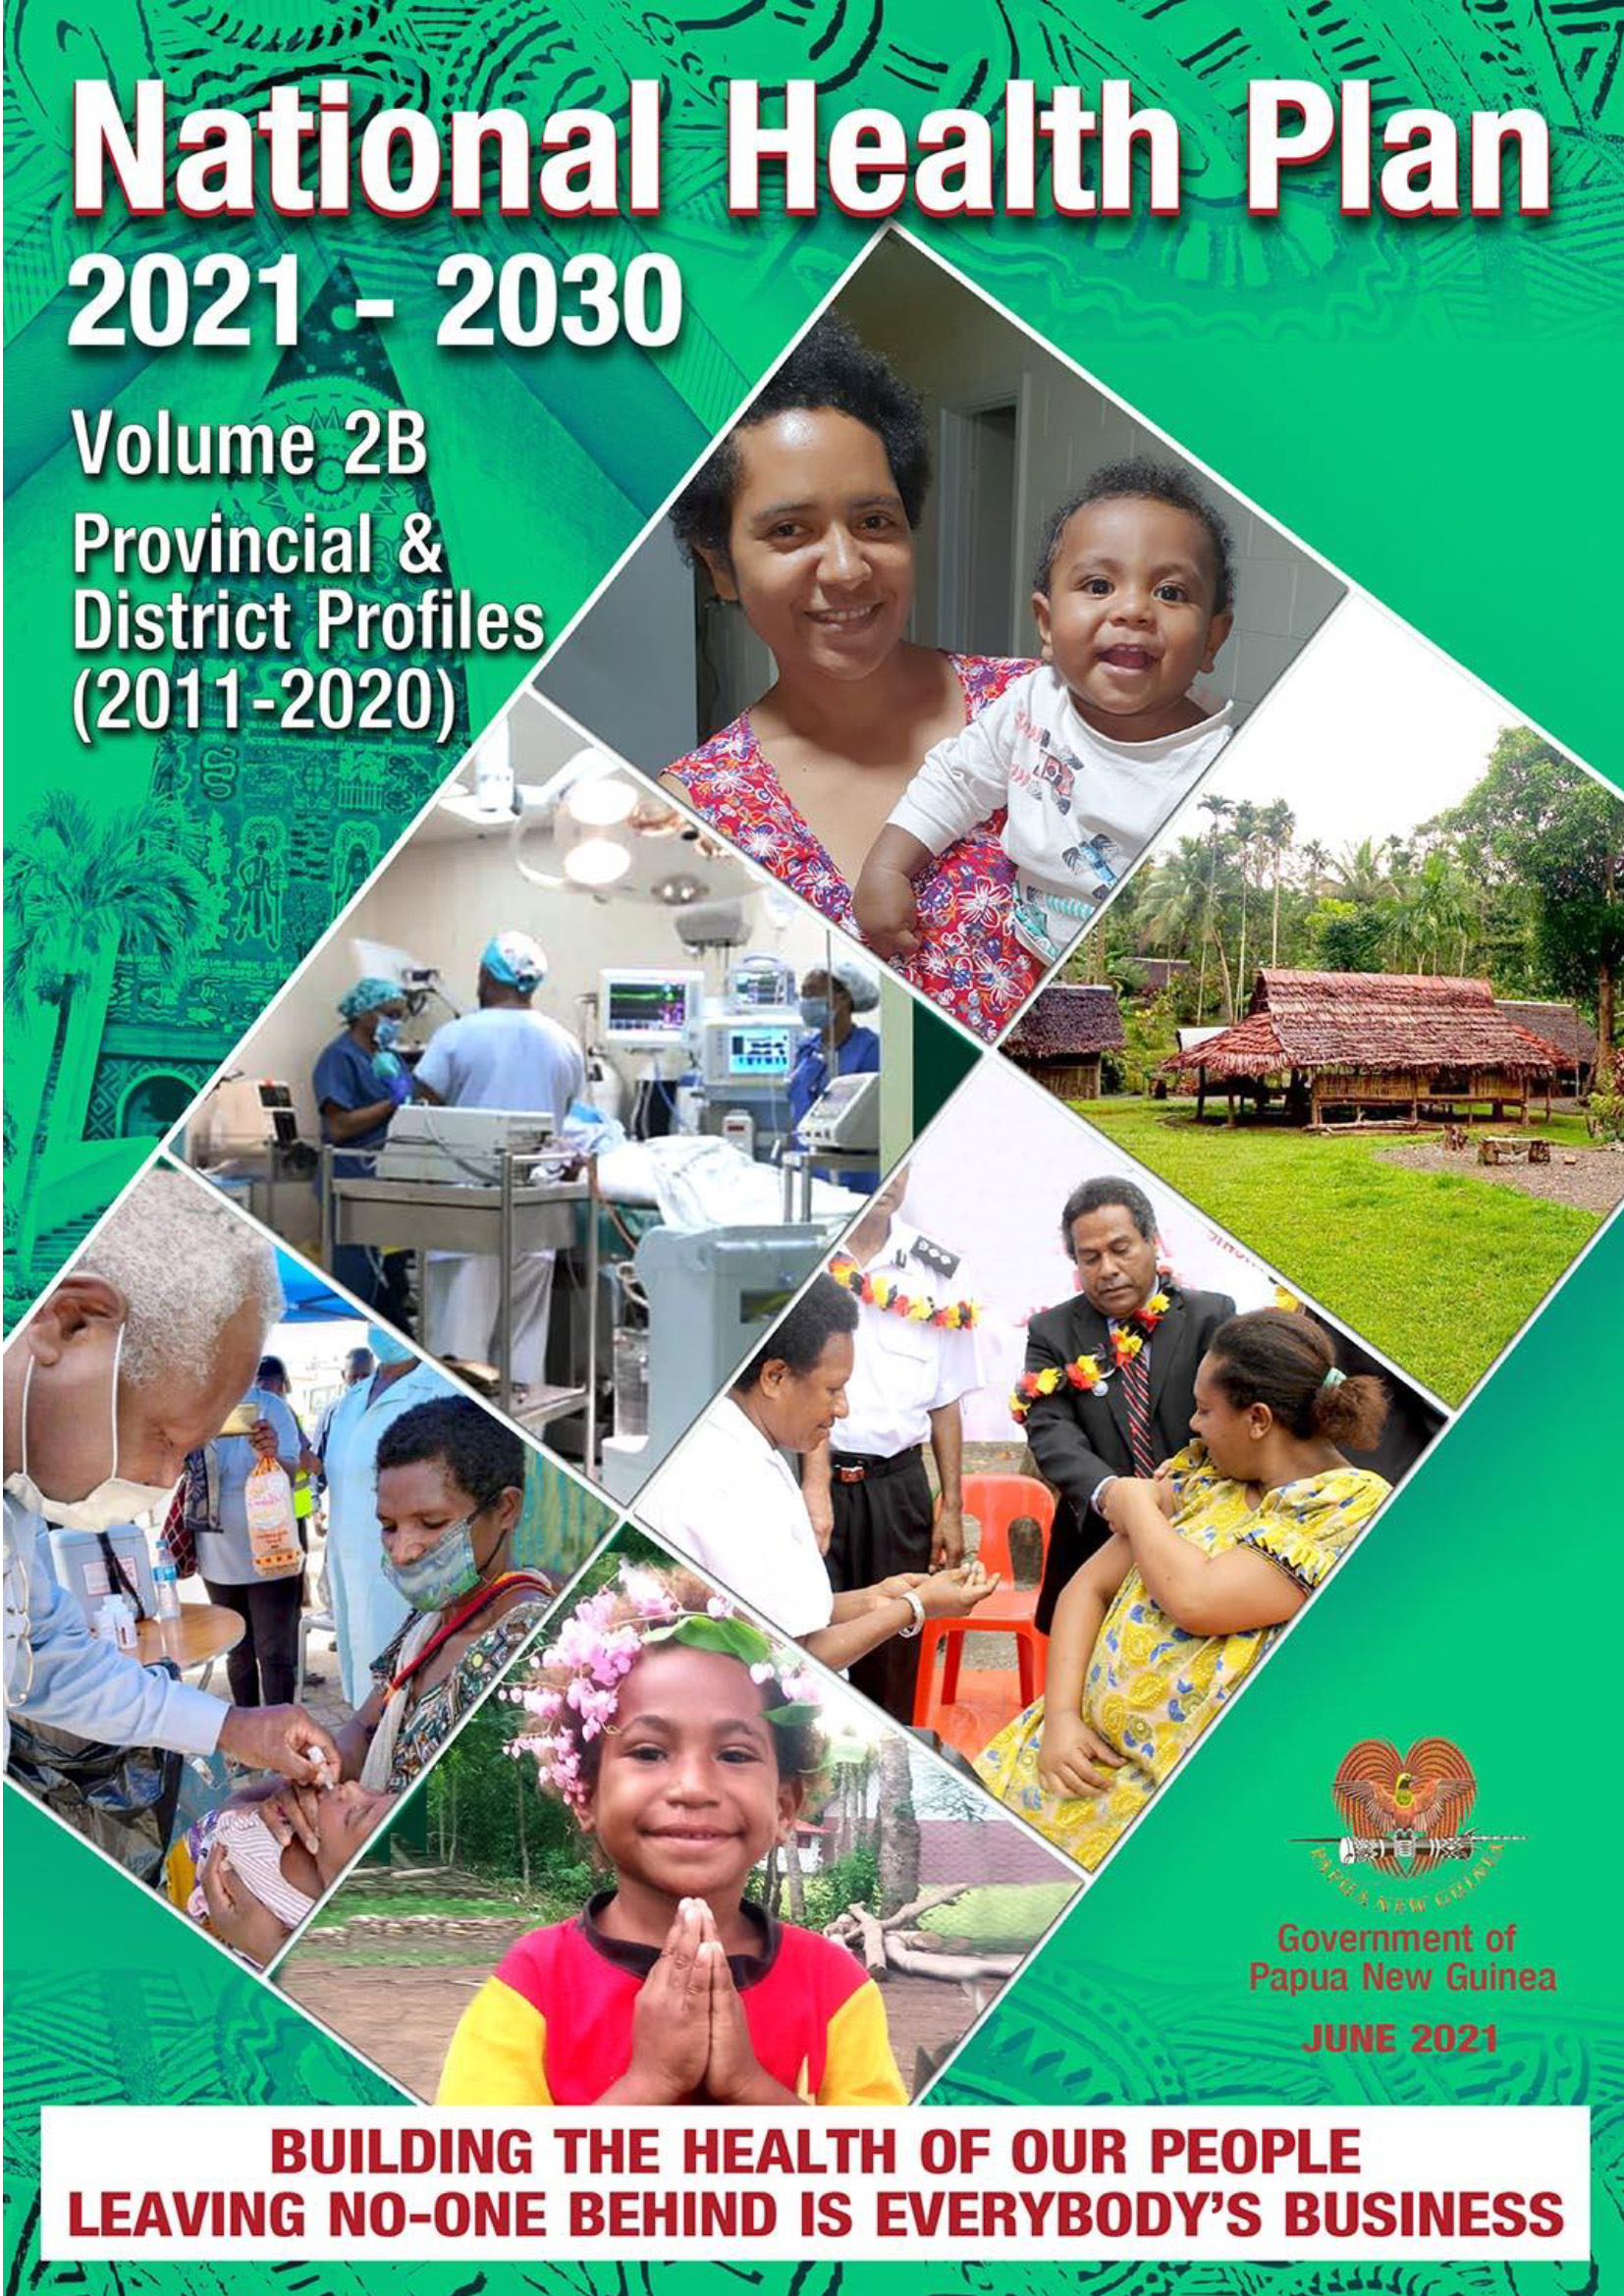 Plan nacional de salud 2021-2030, volumen 2B 